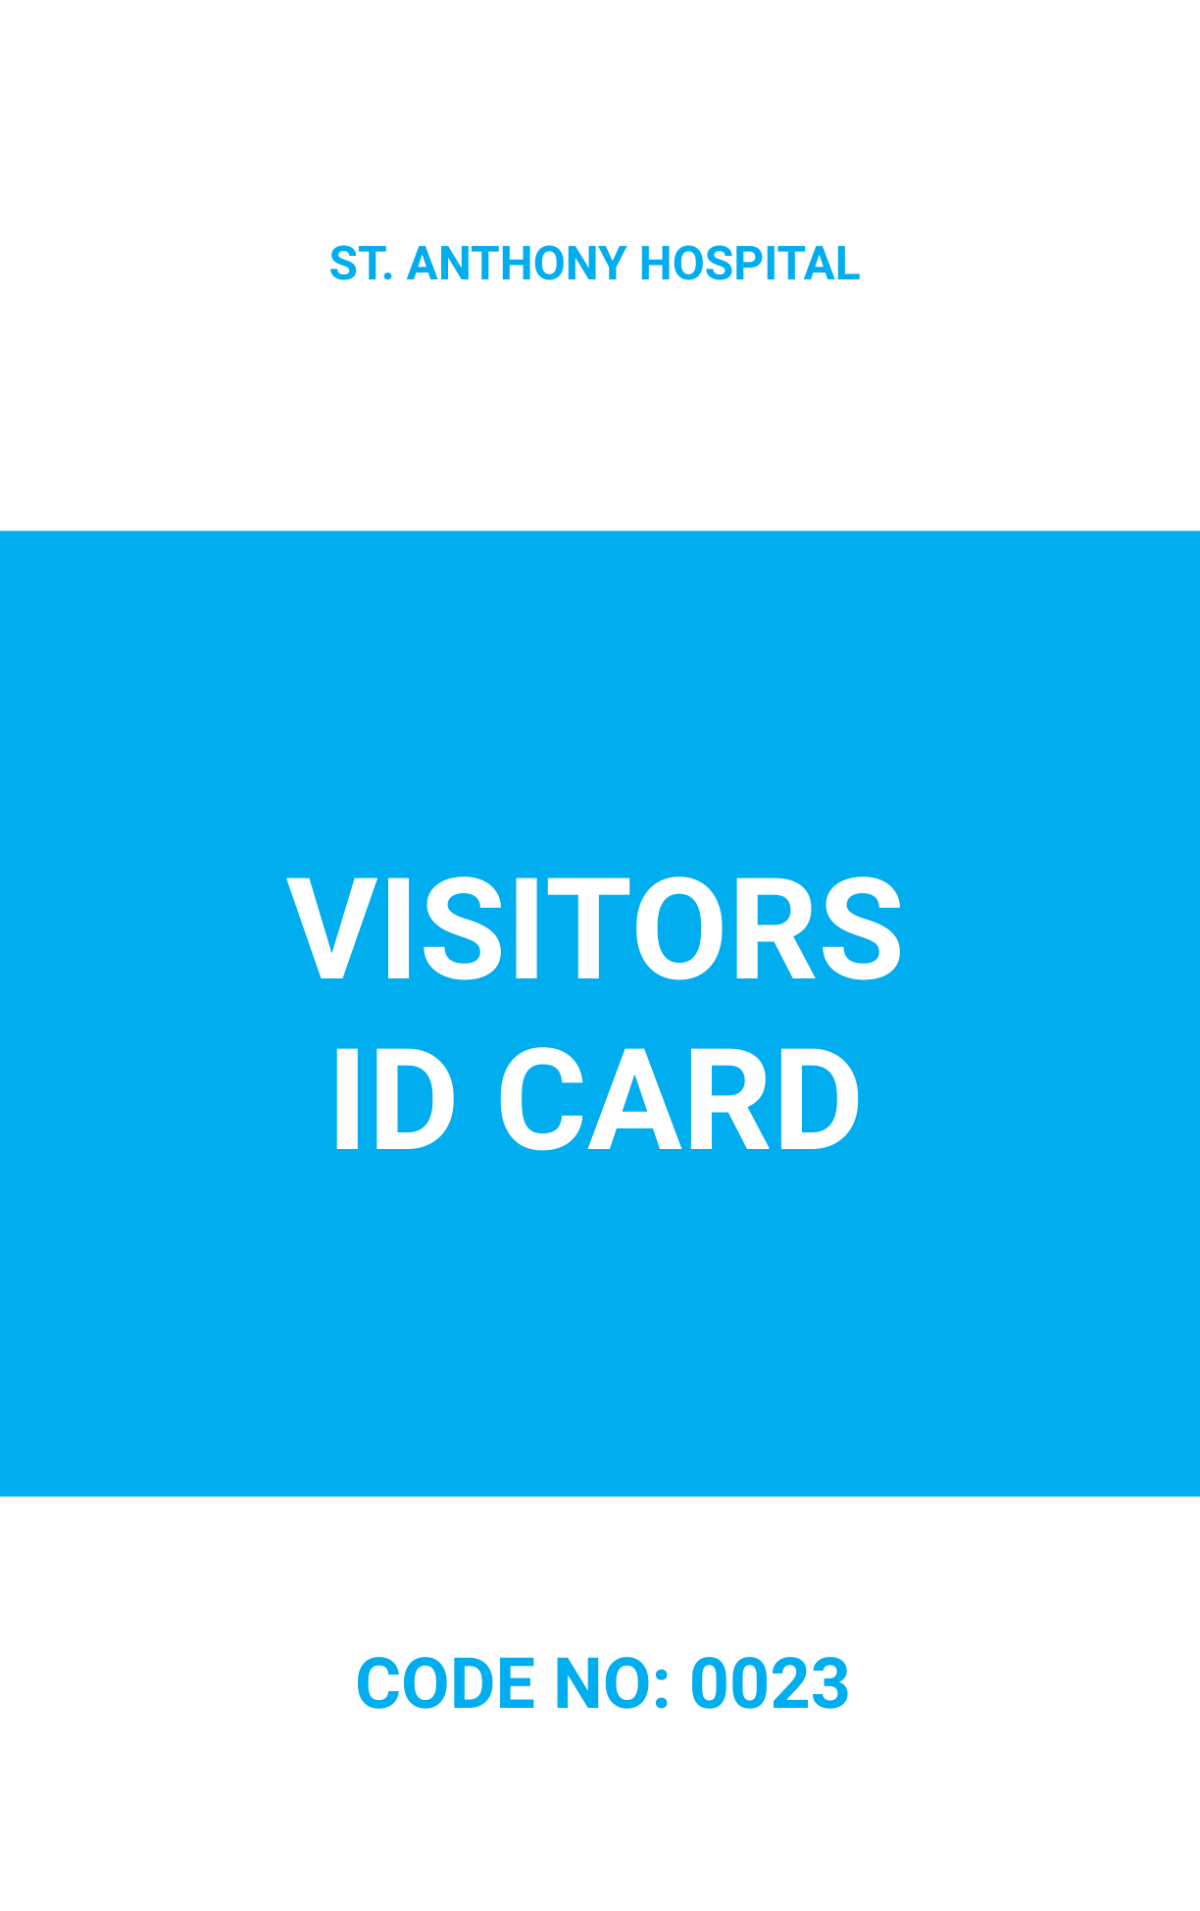 Hospital Visitor ID Card